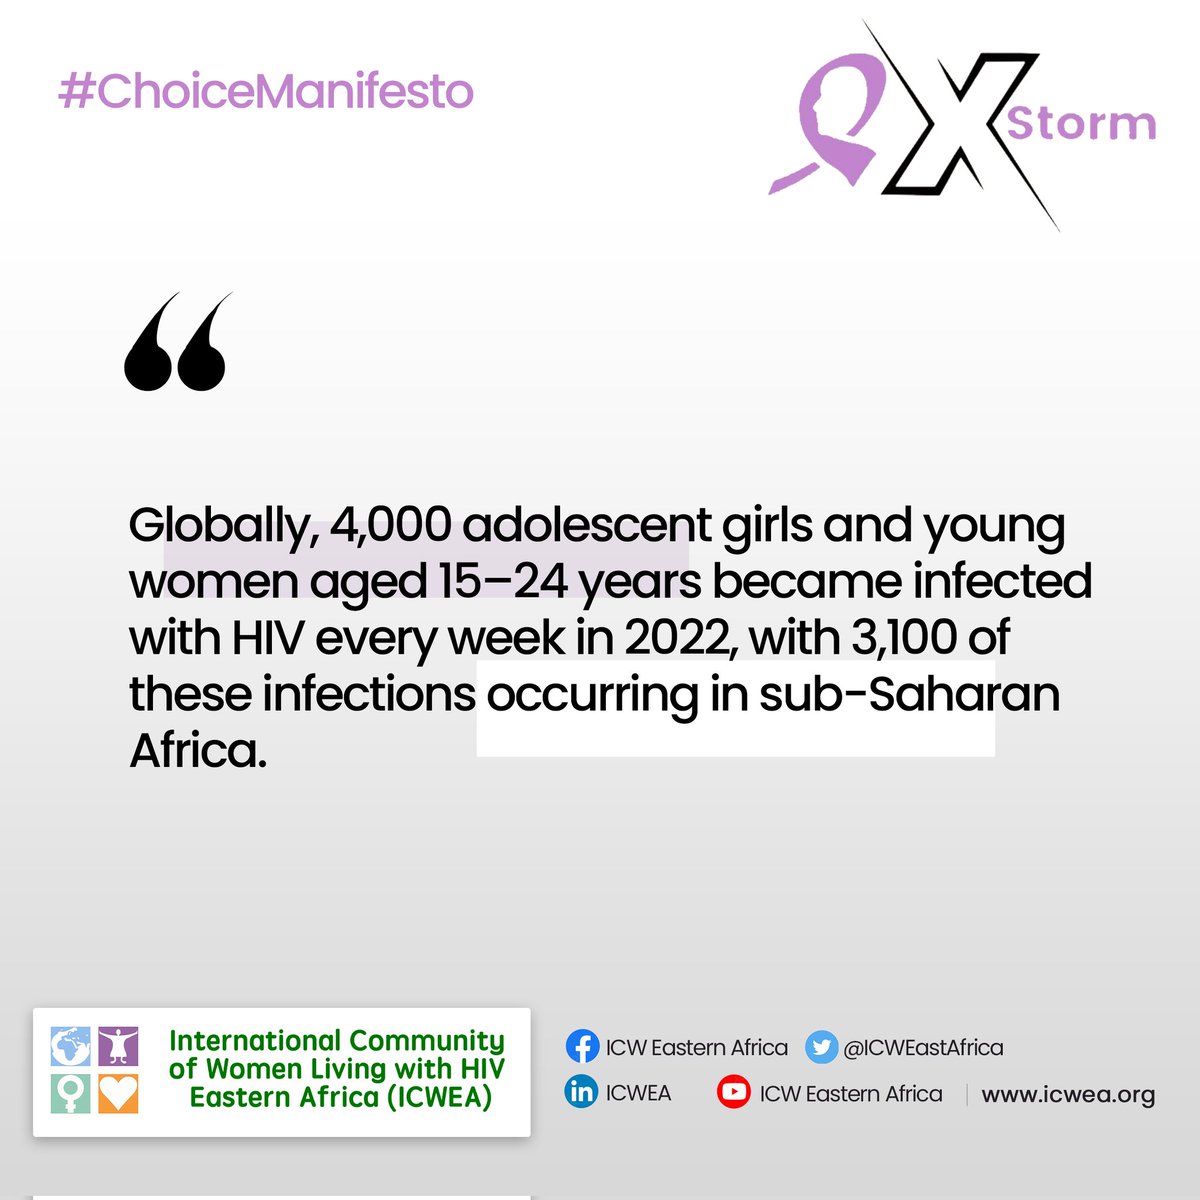 Young women and Adolescent girls let's be Assertive stay safe. @Aidsfonds @ICWEastAfrica @UNAIDS @GlobalFund @PEPFAR @Jnkengasong @aidscommission @HIVpxresearch @unwomenuganda #DVRForChoice #OptionsForHer #PreventionByChoice #ChoiceManifesto